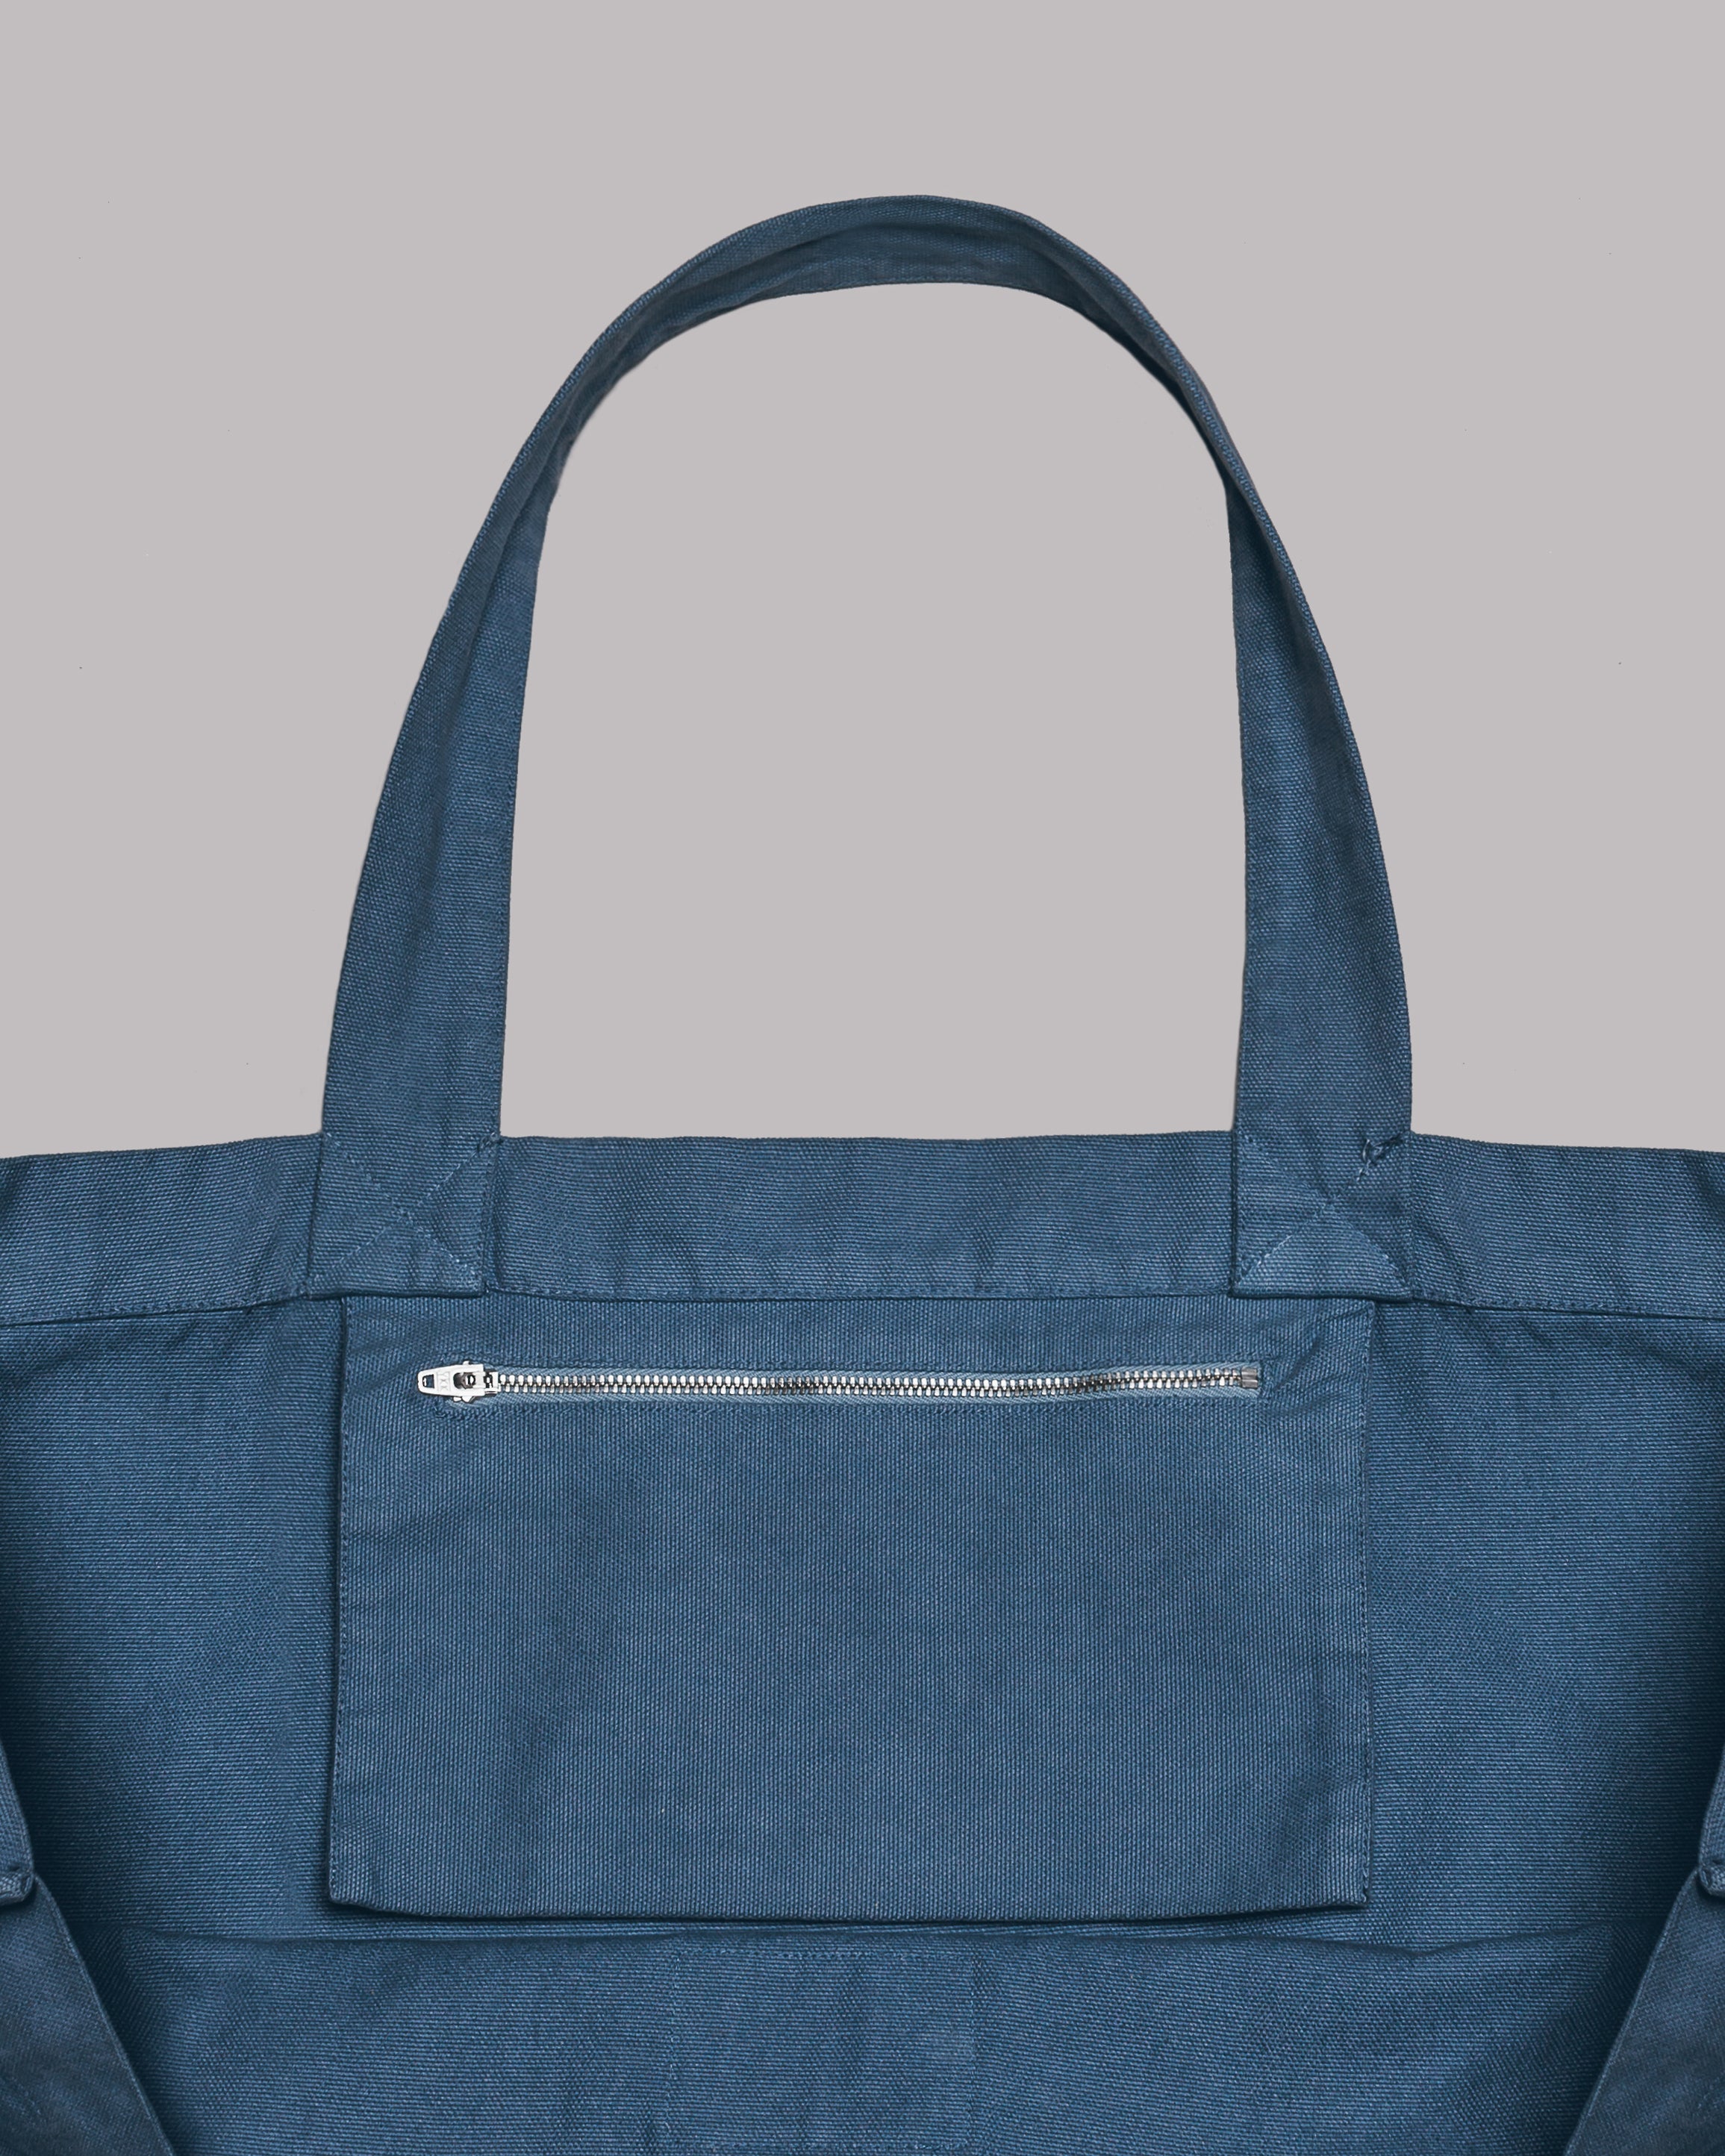 The Blue Large Canvas Bag